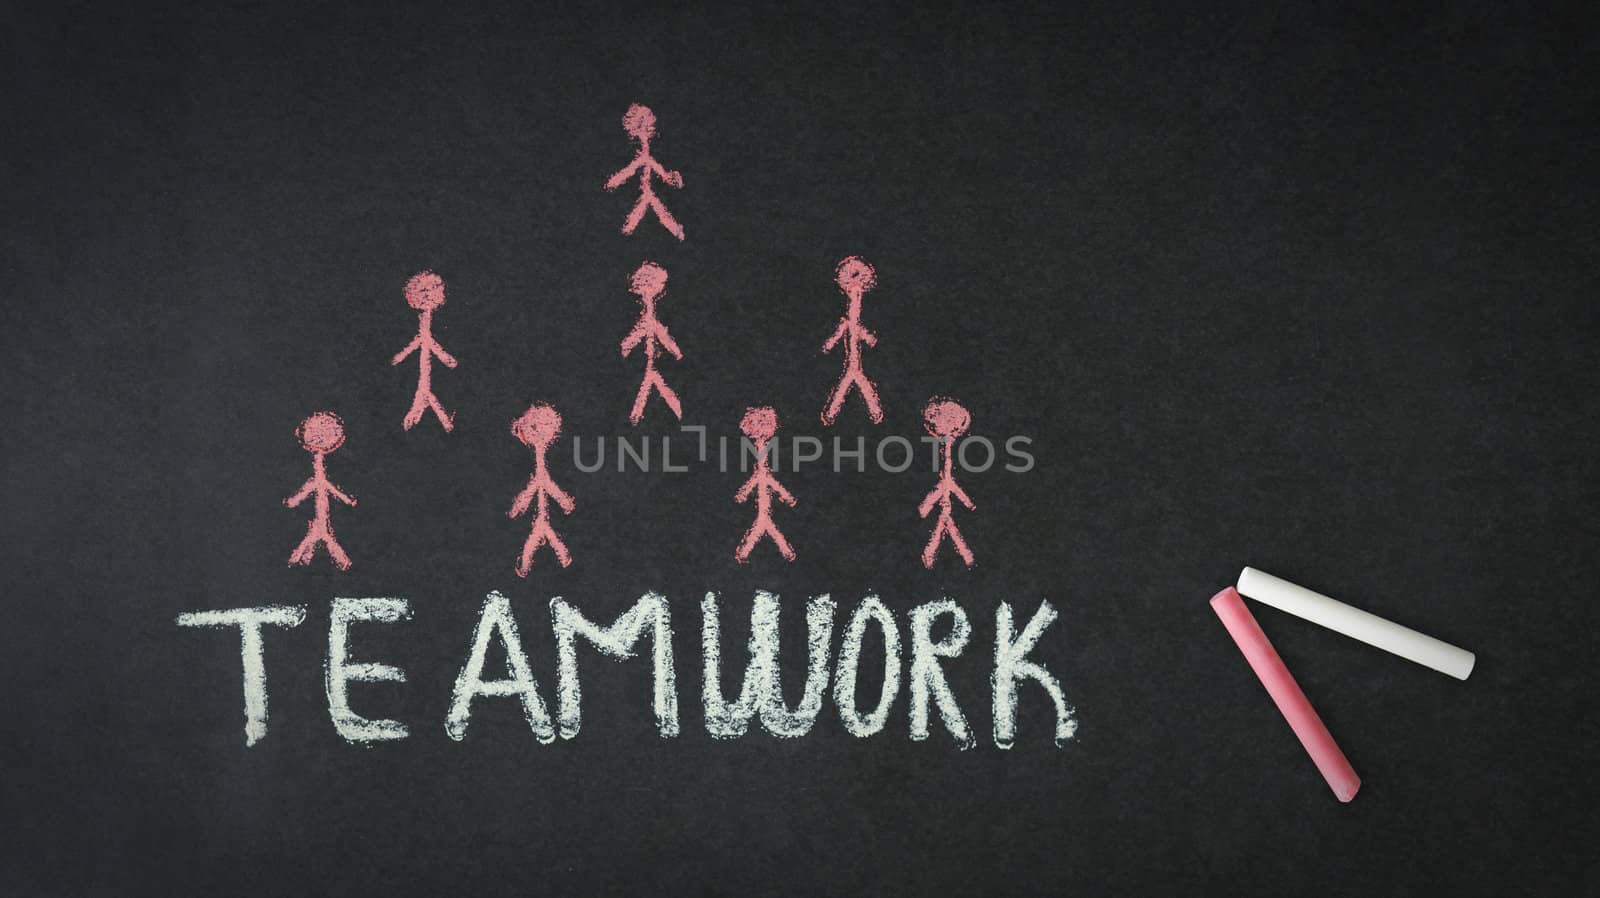 Teamwork Illustration with stick people.